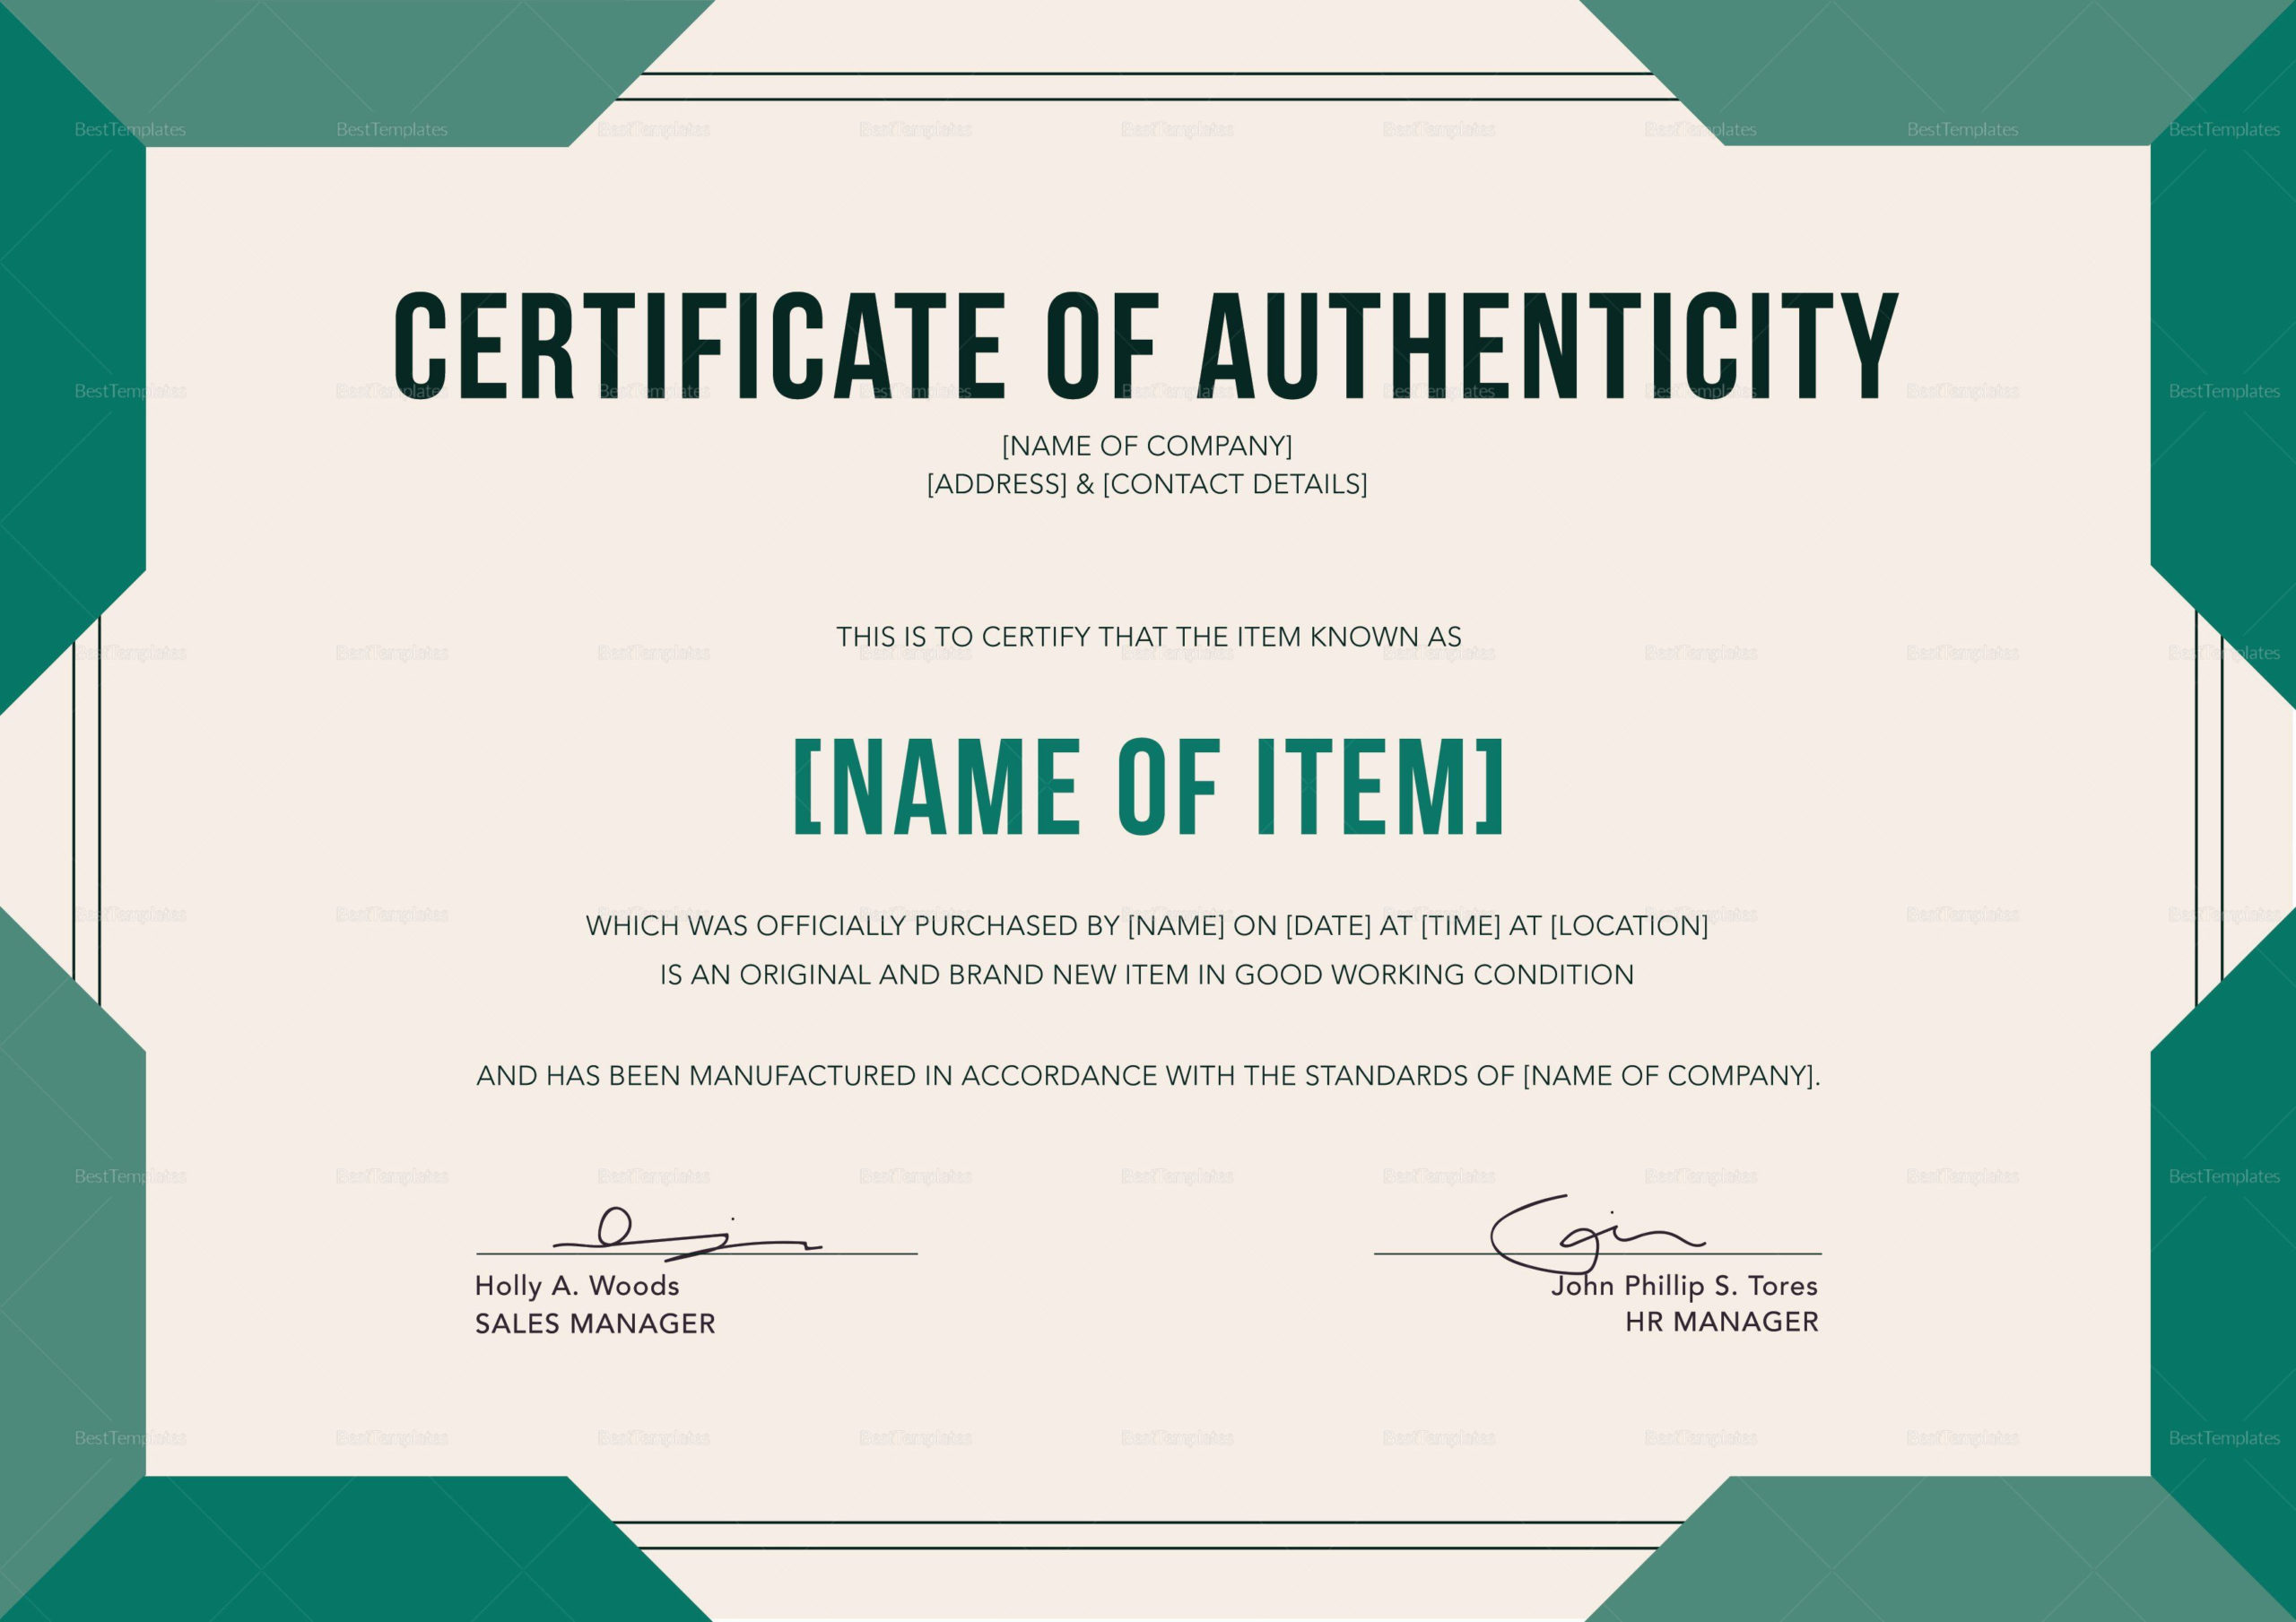 Certificate Of Authenticity Autograph Template throughout Certificate Of Authenticity Template